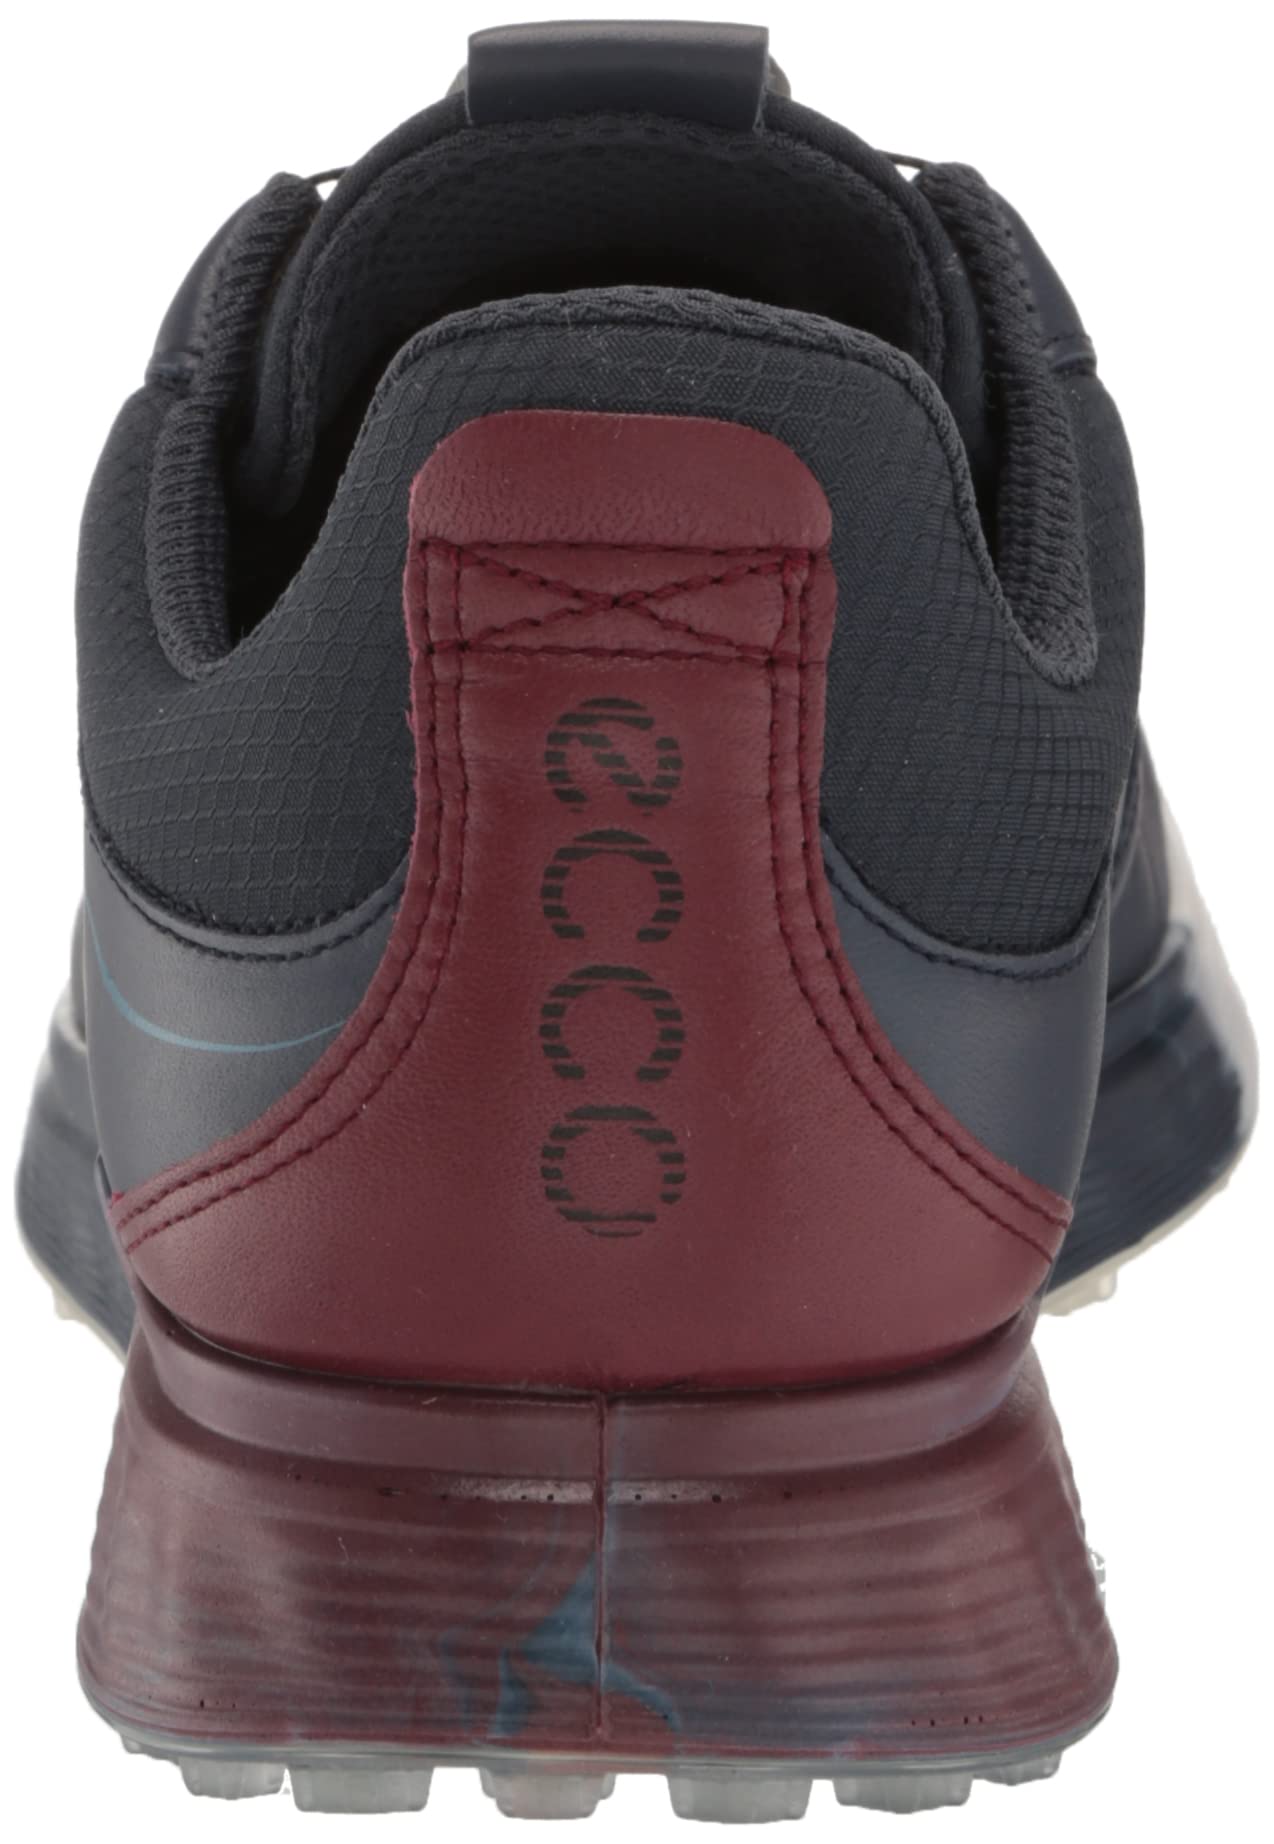 ECCO Men's S-Three Boa Gore-tex Waterproof Golf Shoe